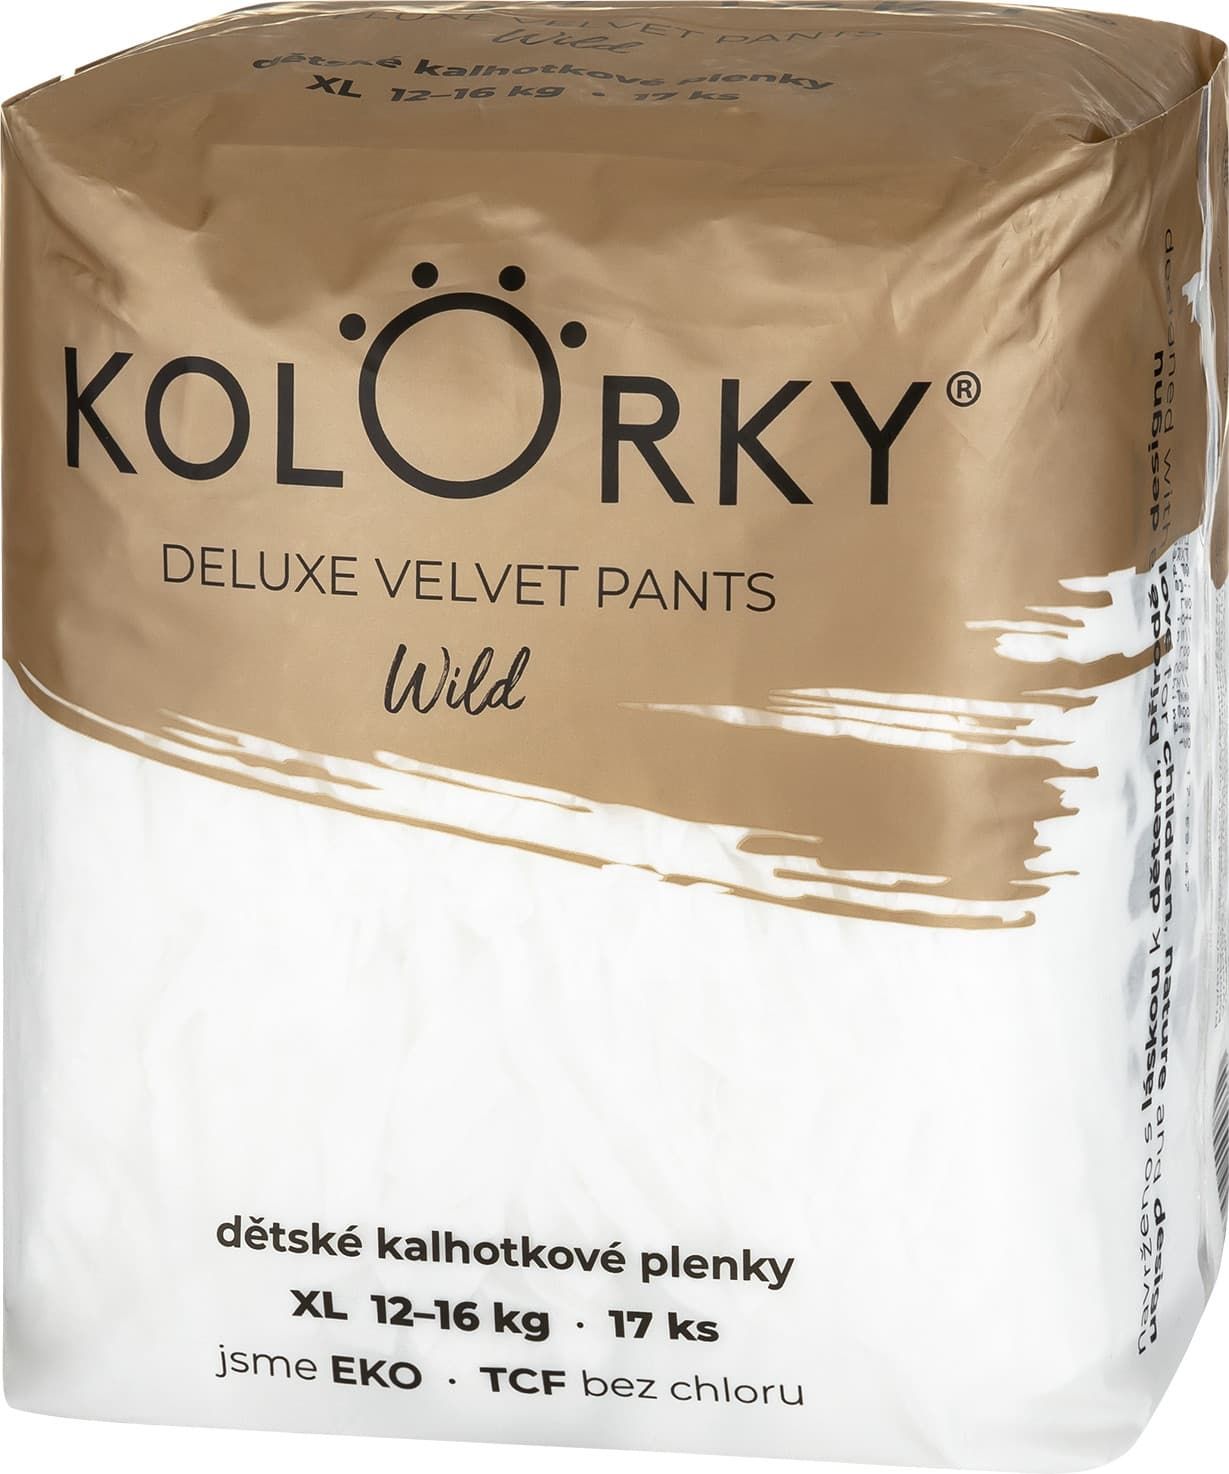 Kolorky Deluxe Velvet Pants Jednorázové kalhotkové eko plenky - wild - XL (12-16 kg) 17 ks